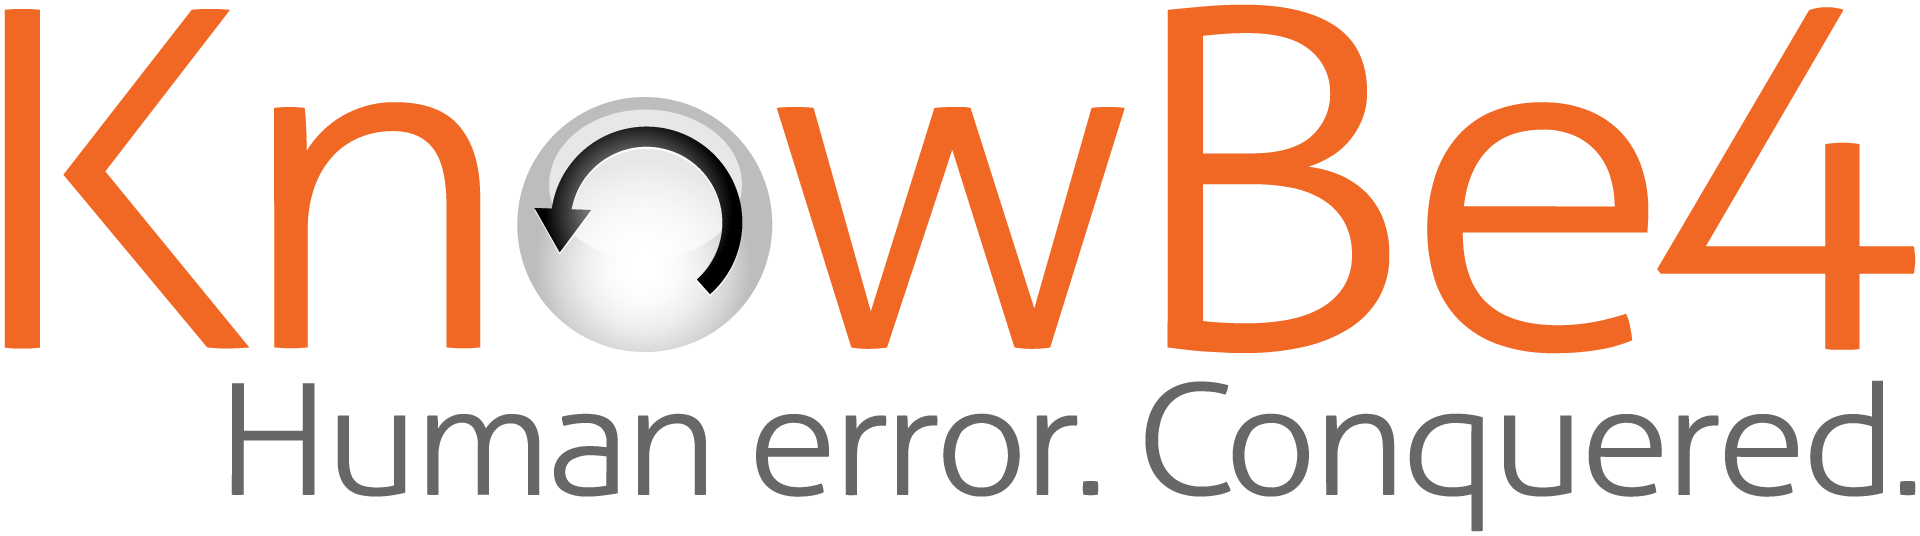 KnowBe4 logo